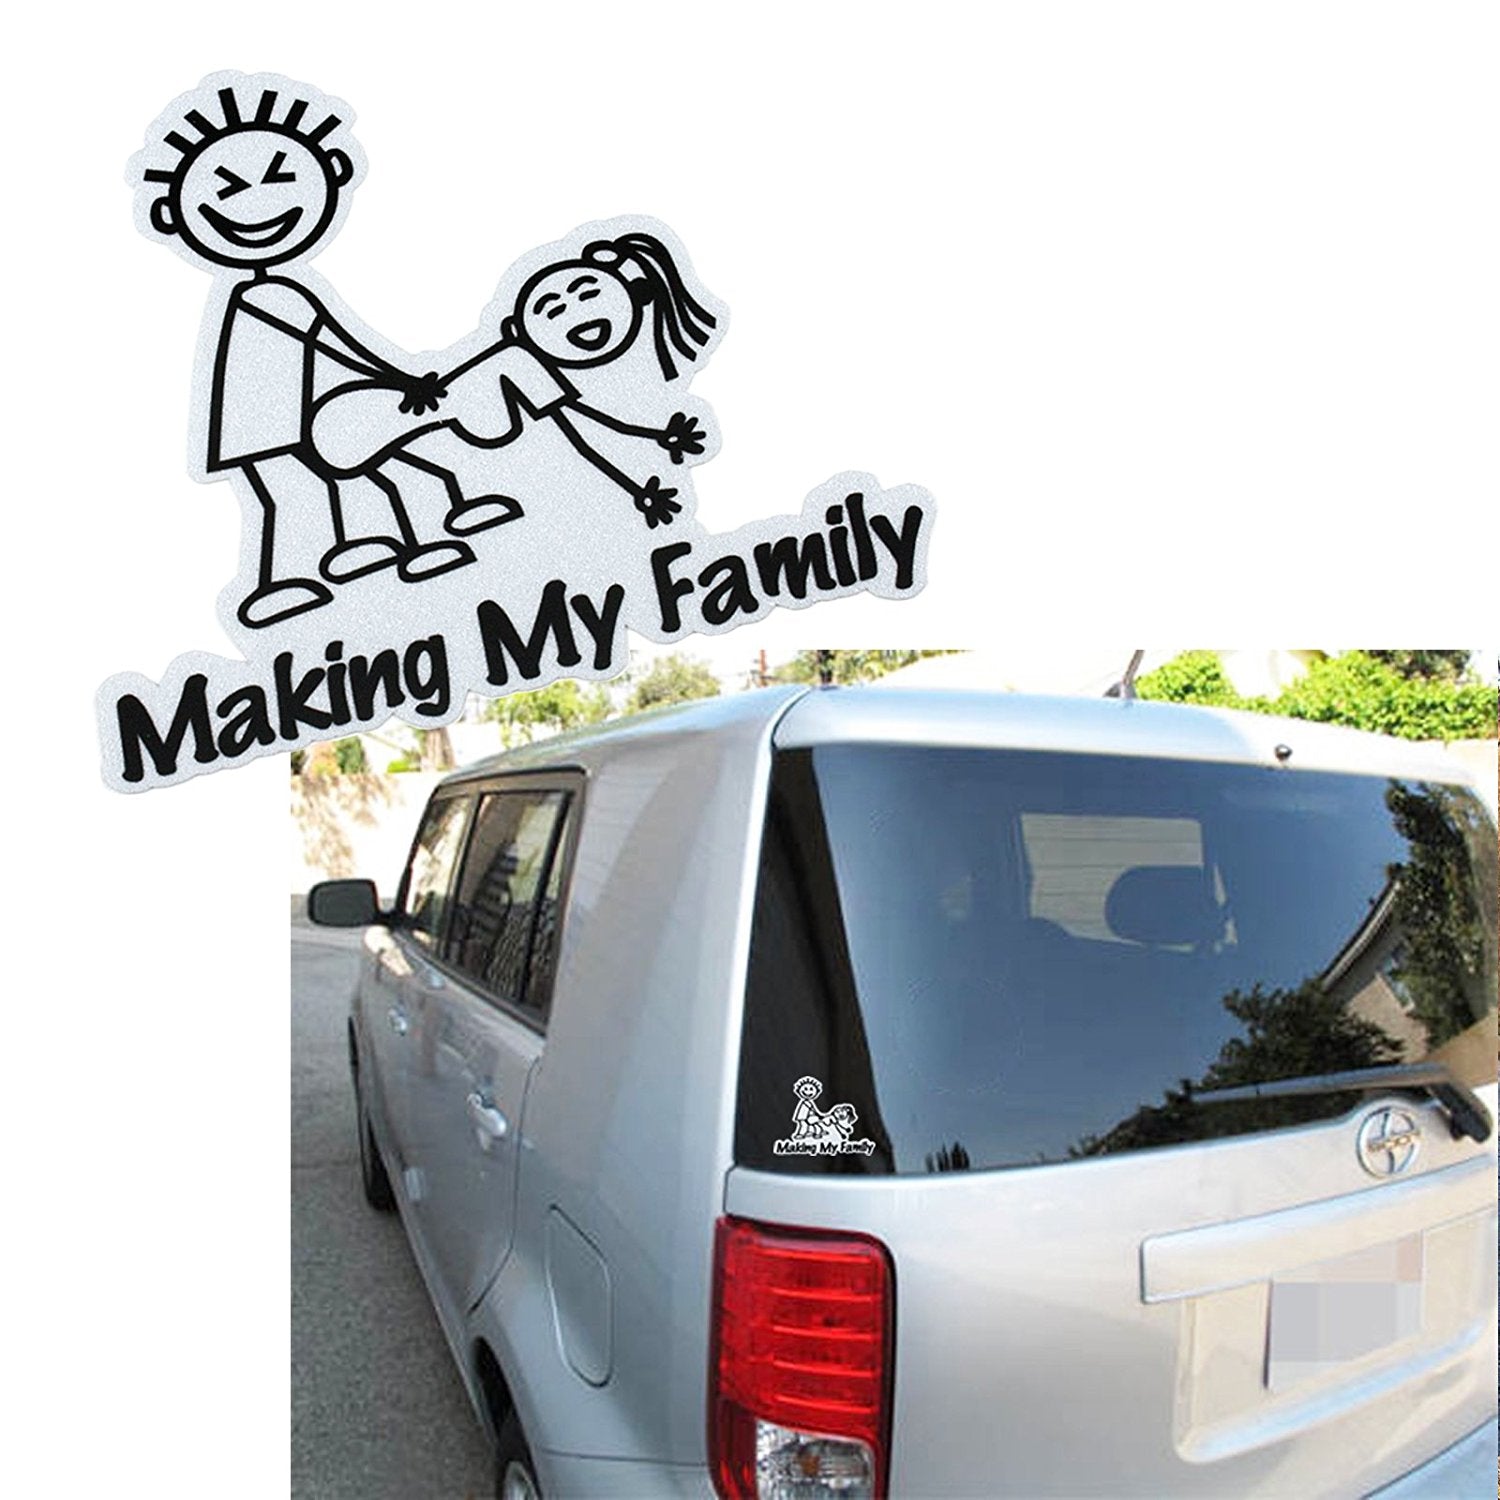 Making My Family Funny Bumper Decal Sticker Vinyl Stick Figure Family Car  Truck Window 